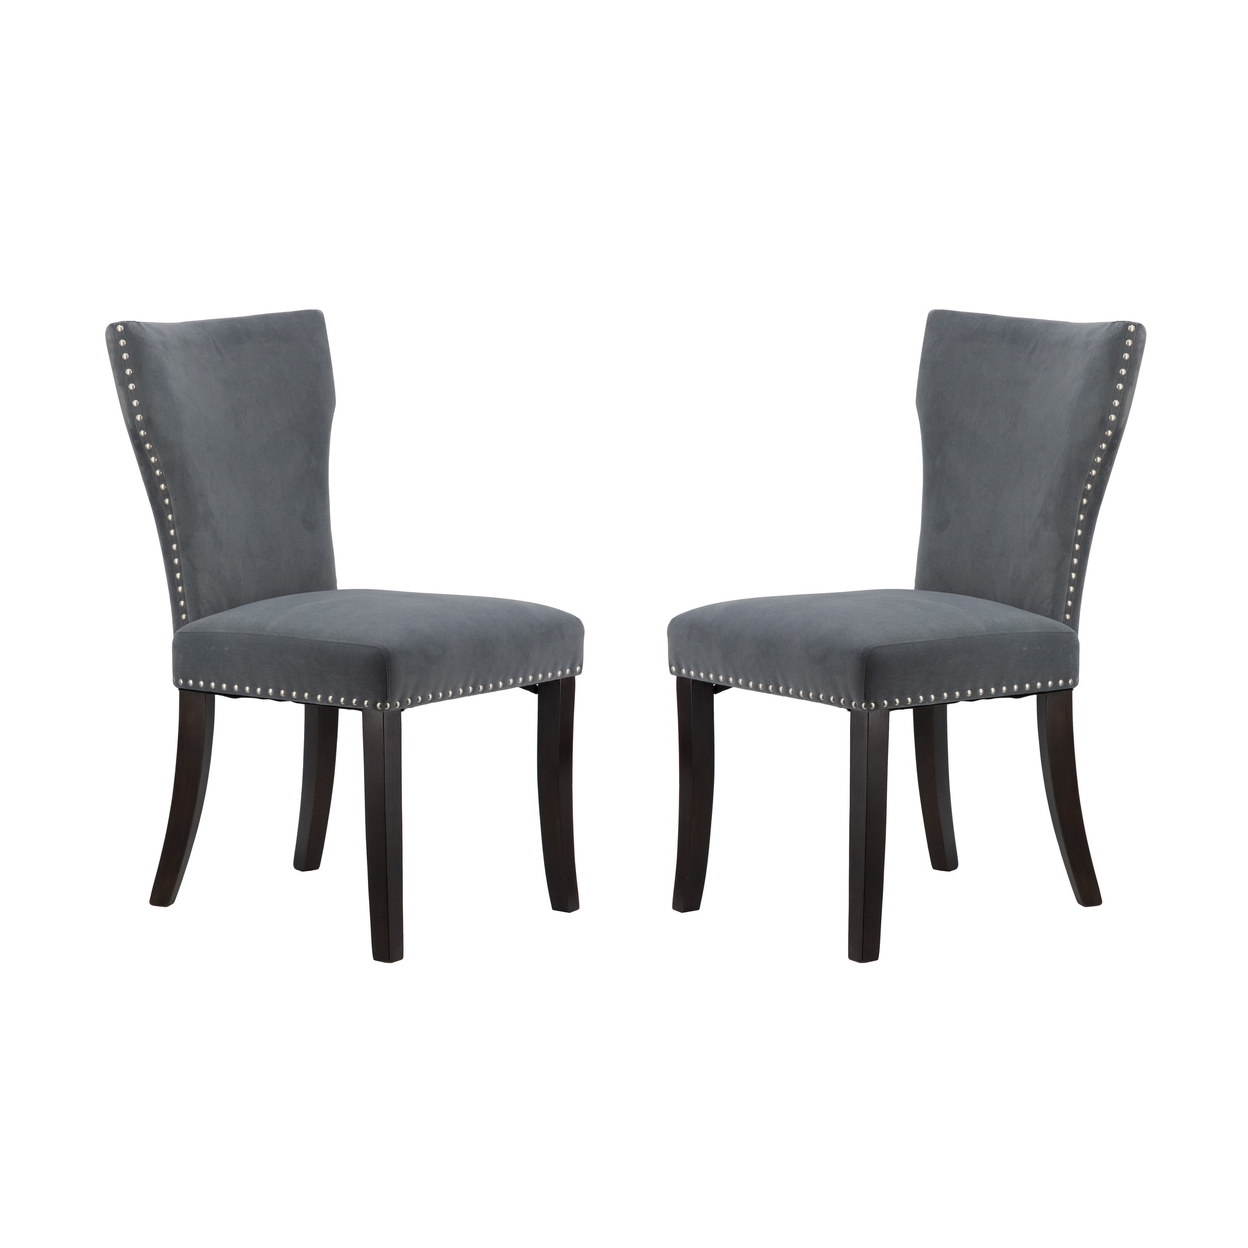 Devi 25 Inch Curved Dining Chair, Gray Velvet Upholstery, Nailhead Trim- Saltoro Sherpi